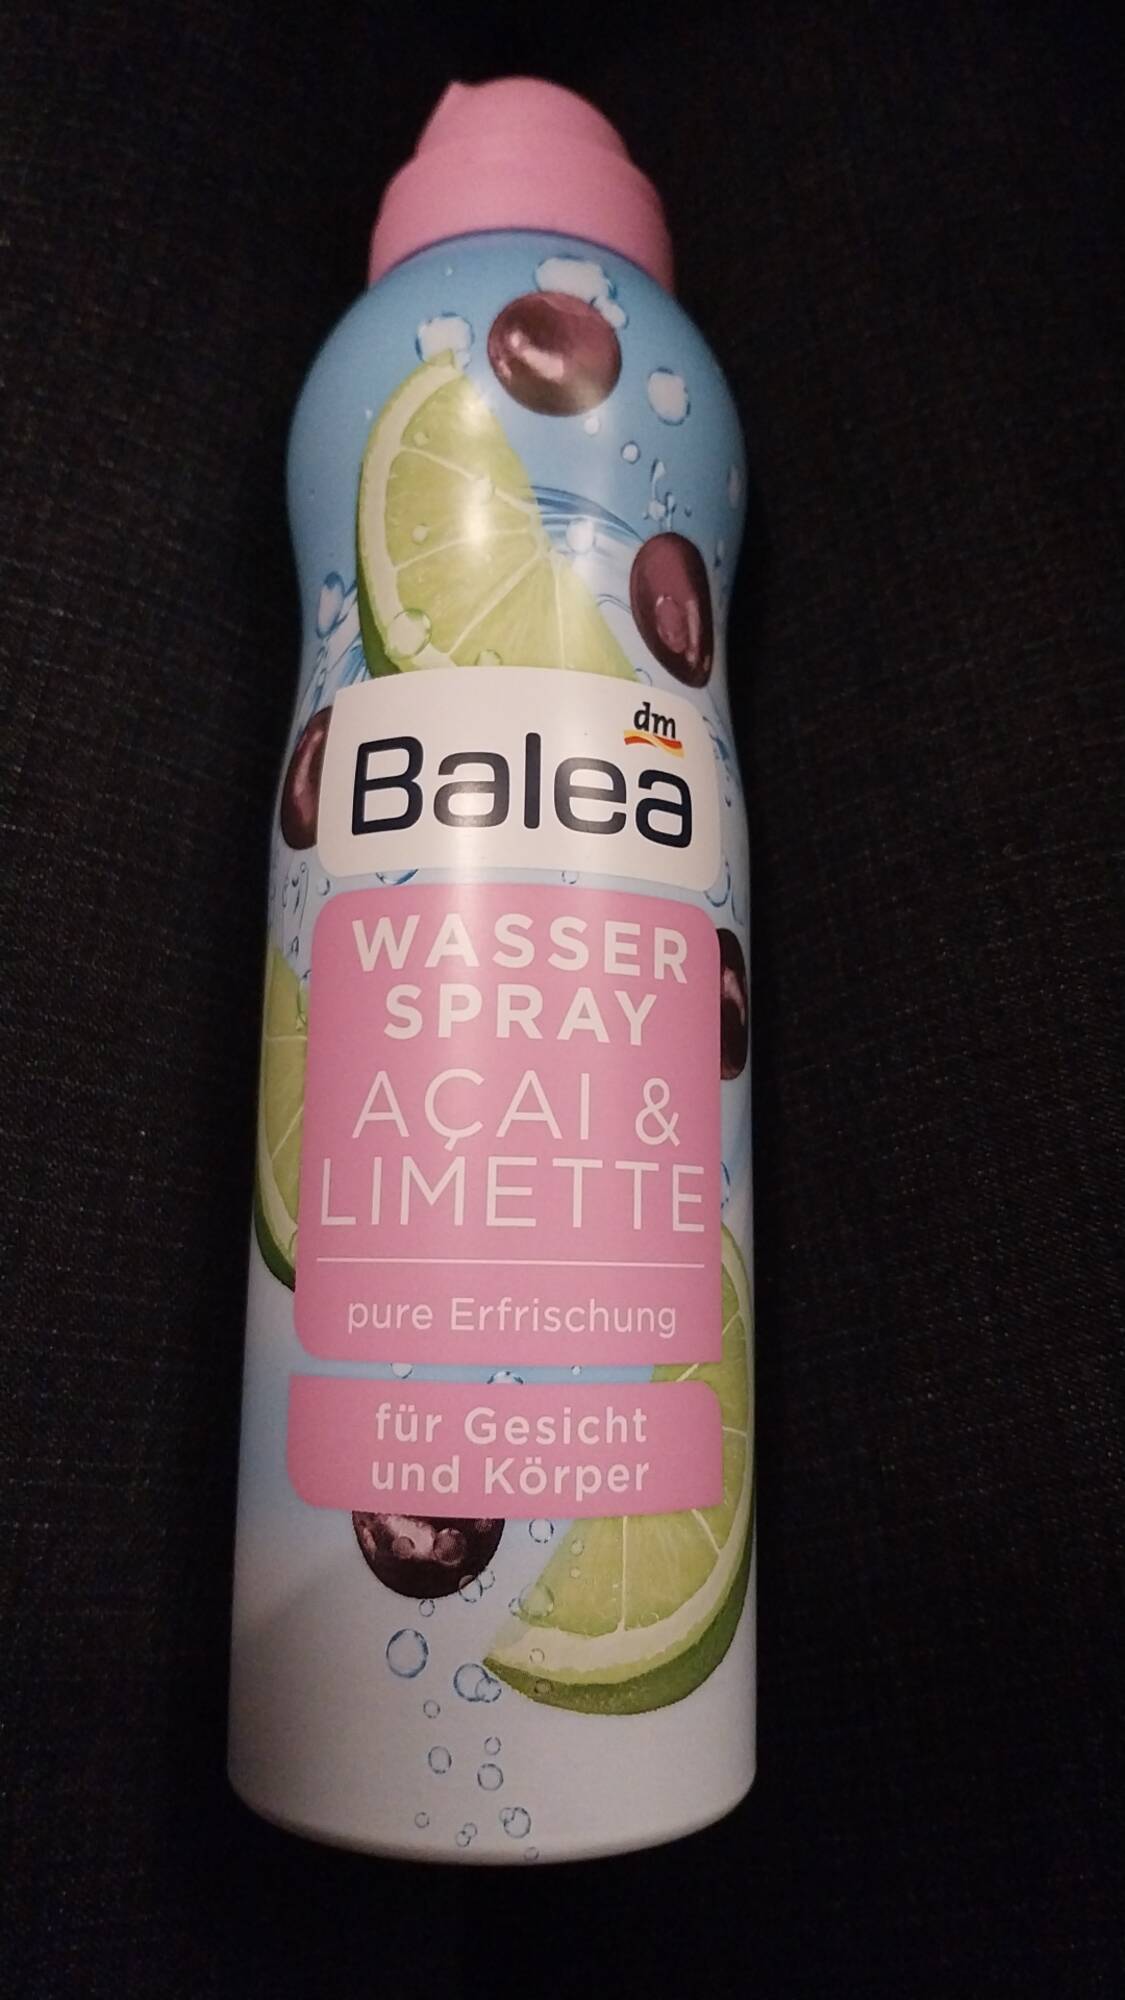 BALEA DM - Açai & limette - Wasser spray